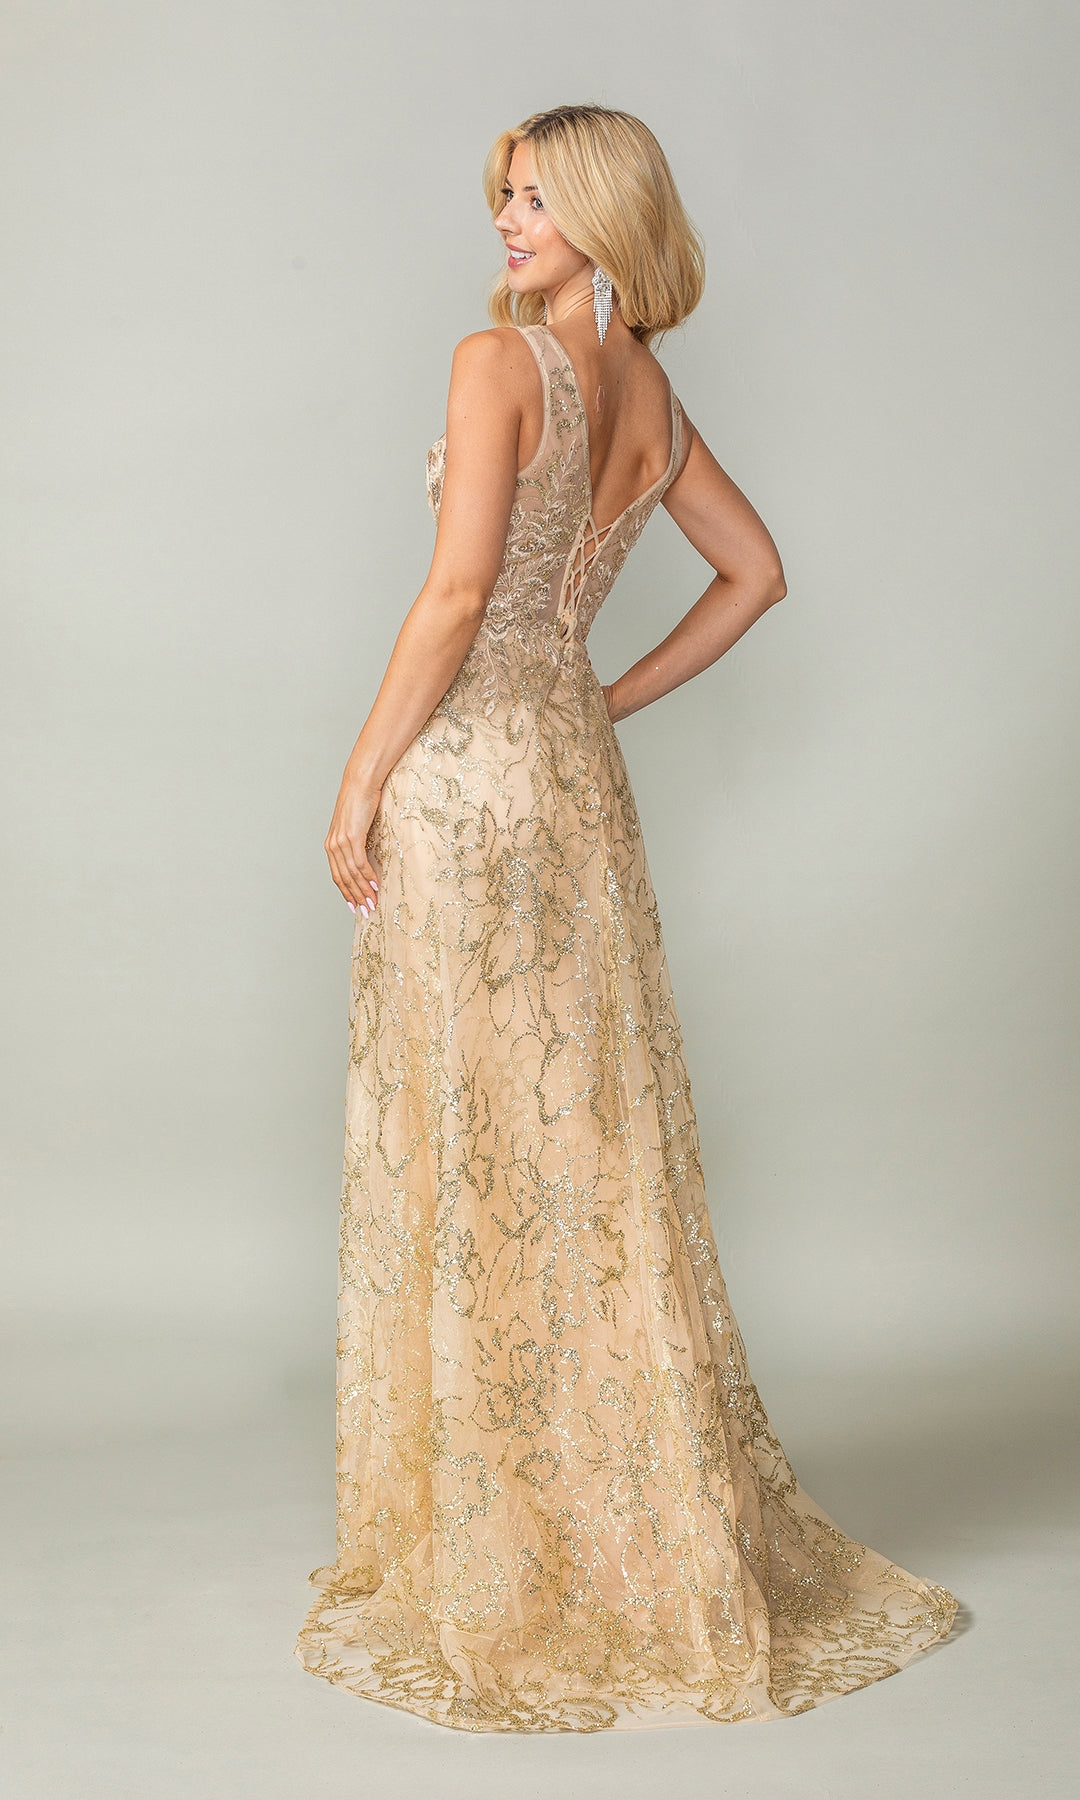 Glitter-Print Lace-Up Long Prom Dress 4379